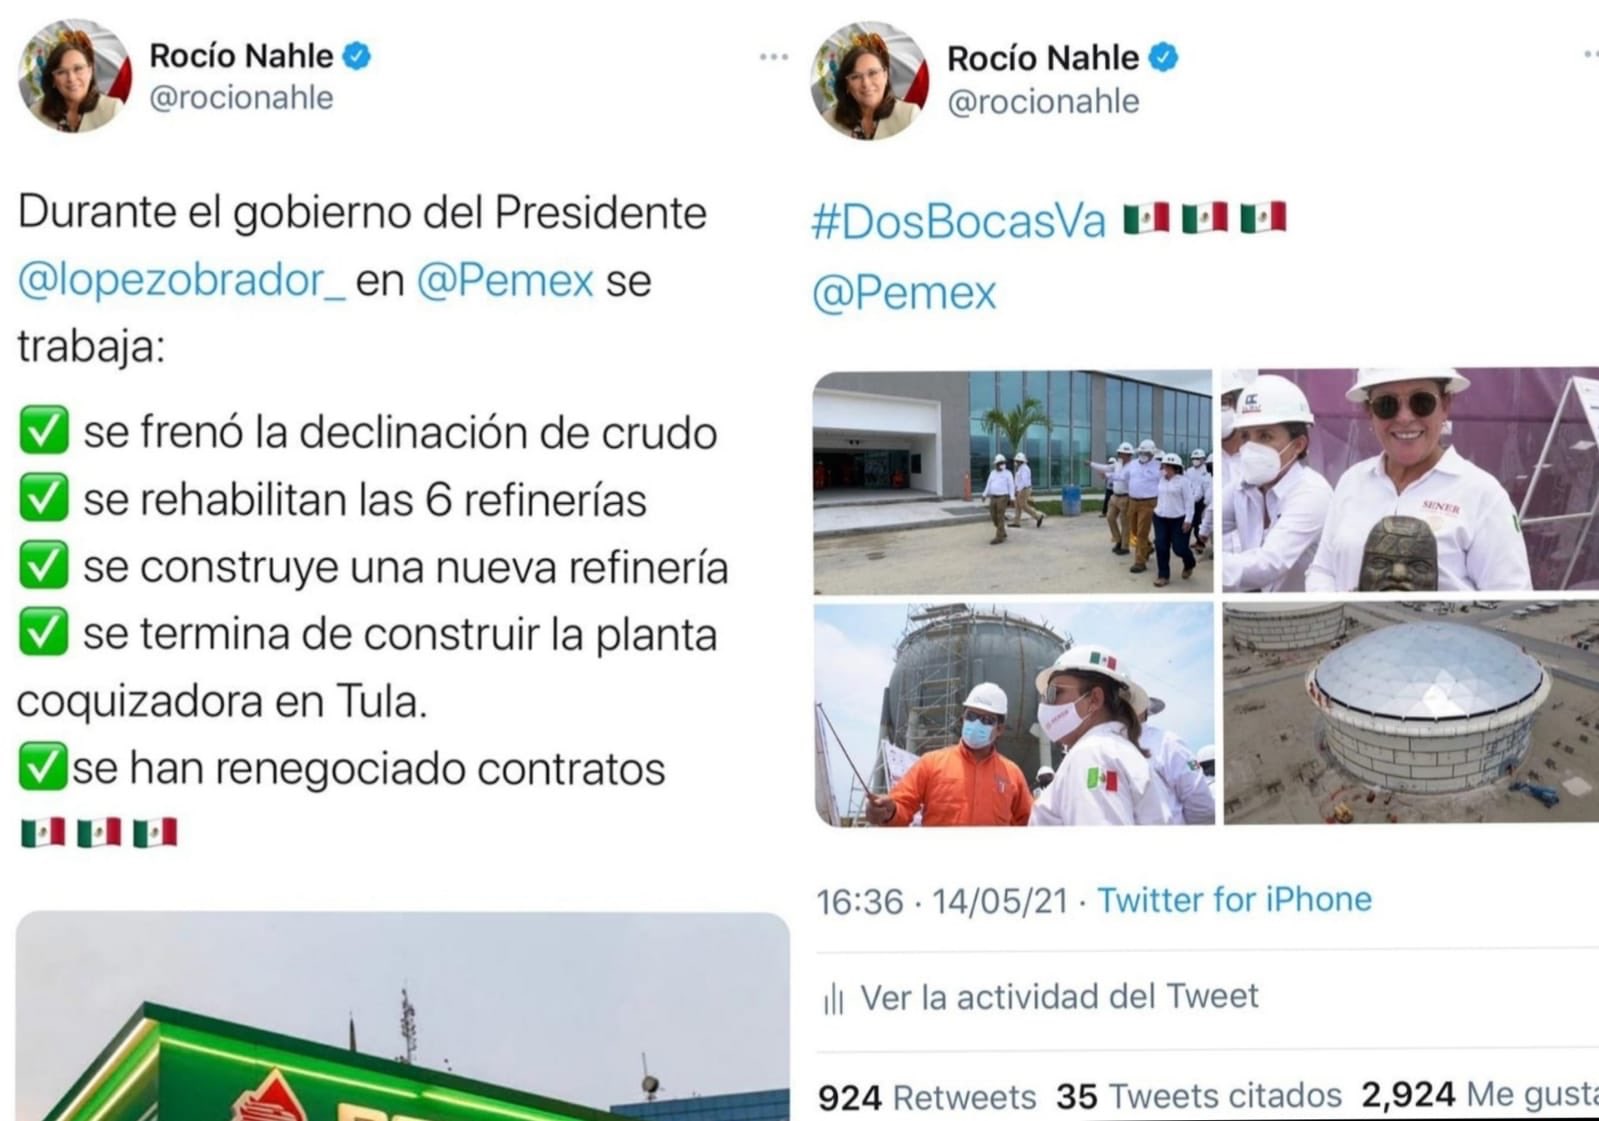 Rocío Nahle on Twitter: "¡Que Viva la Democracia! https://t.co/zsbV7QJhmT"  / Twitter